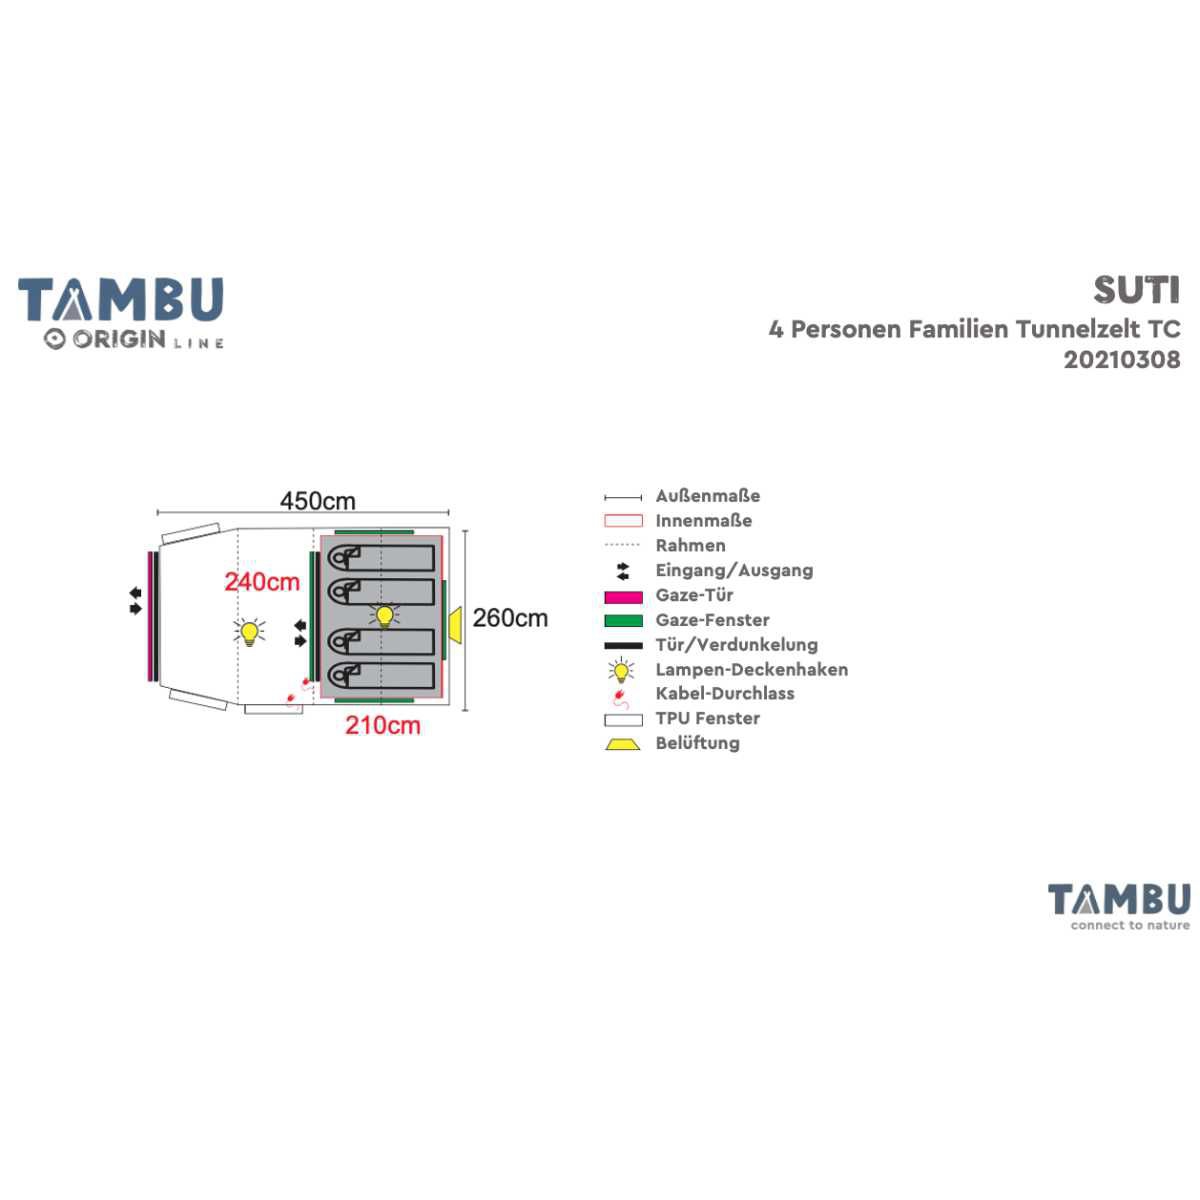 TAMBU SUTI TC Familien Tunnelzelt Graublau 4 Personen - 20210308